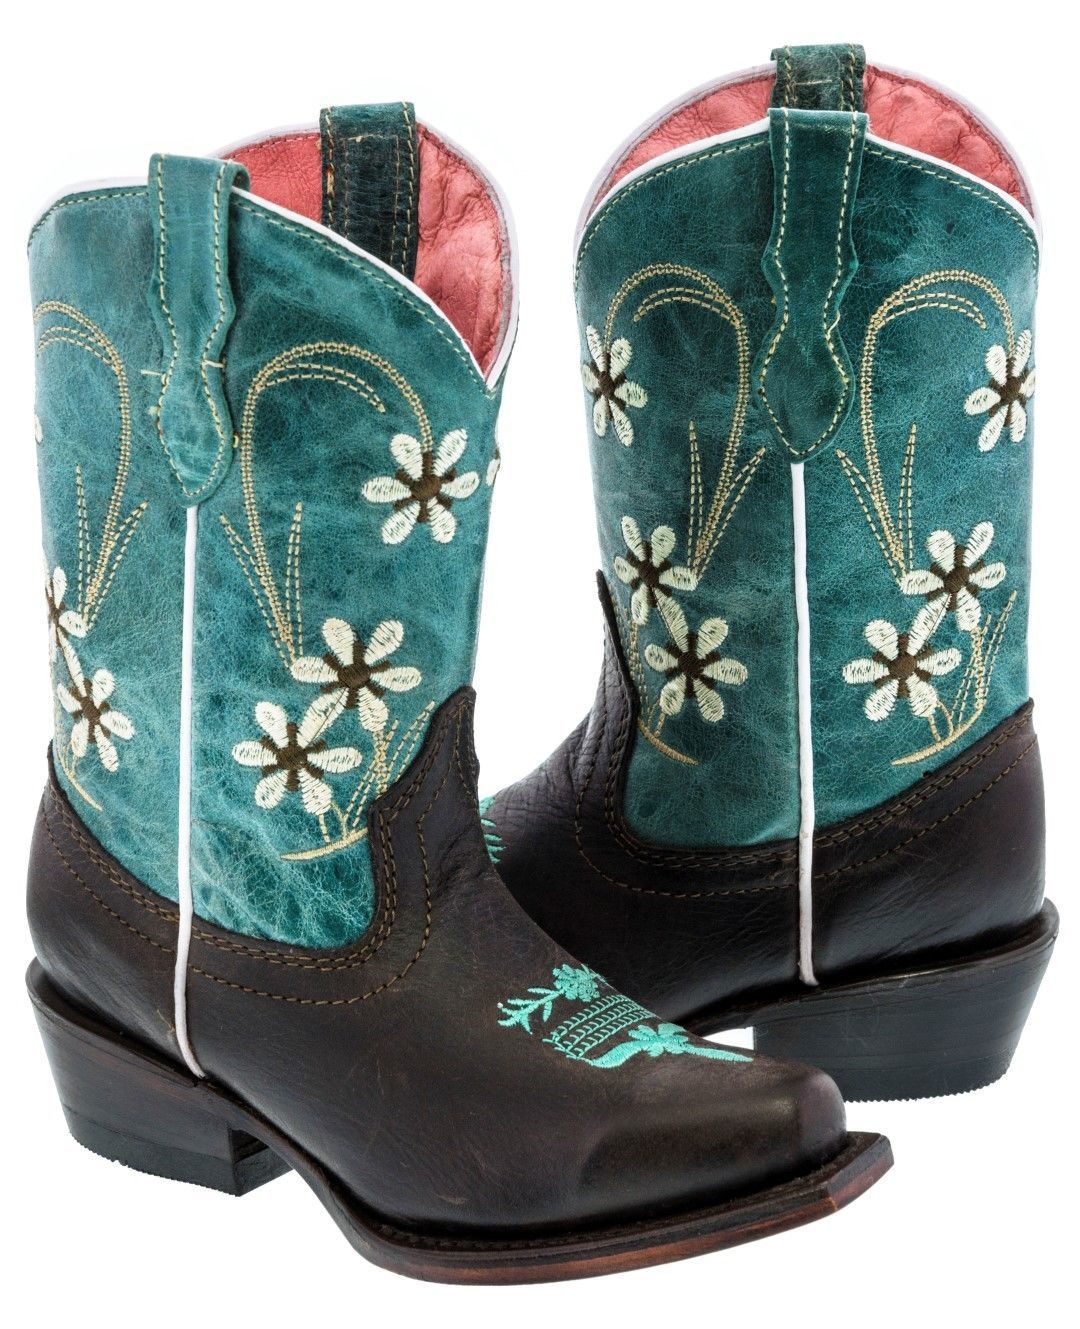 veretta boots